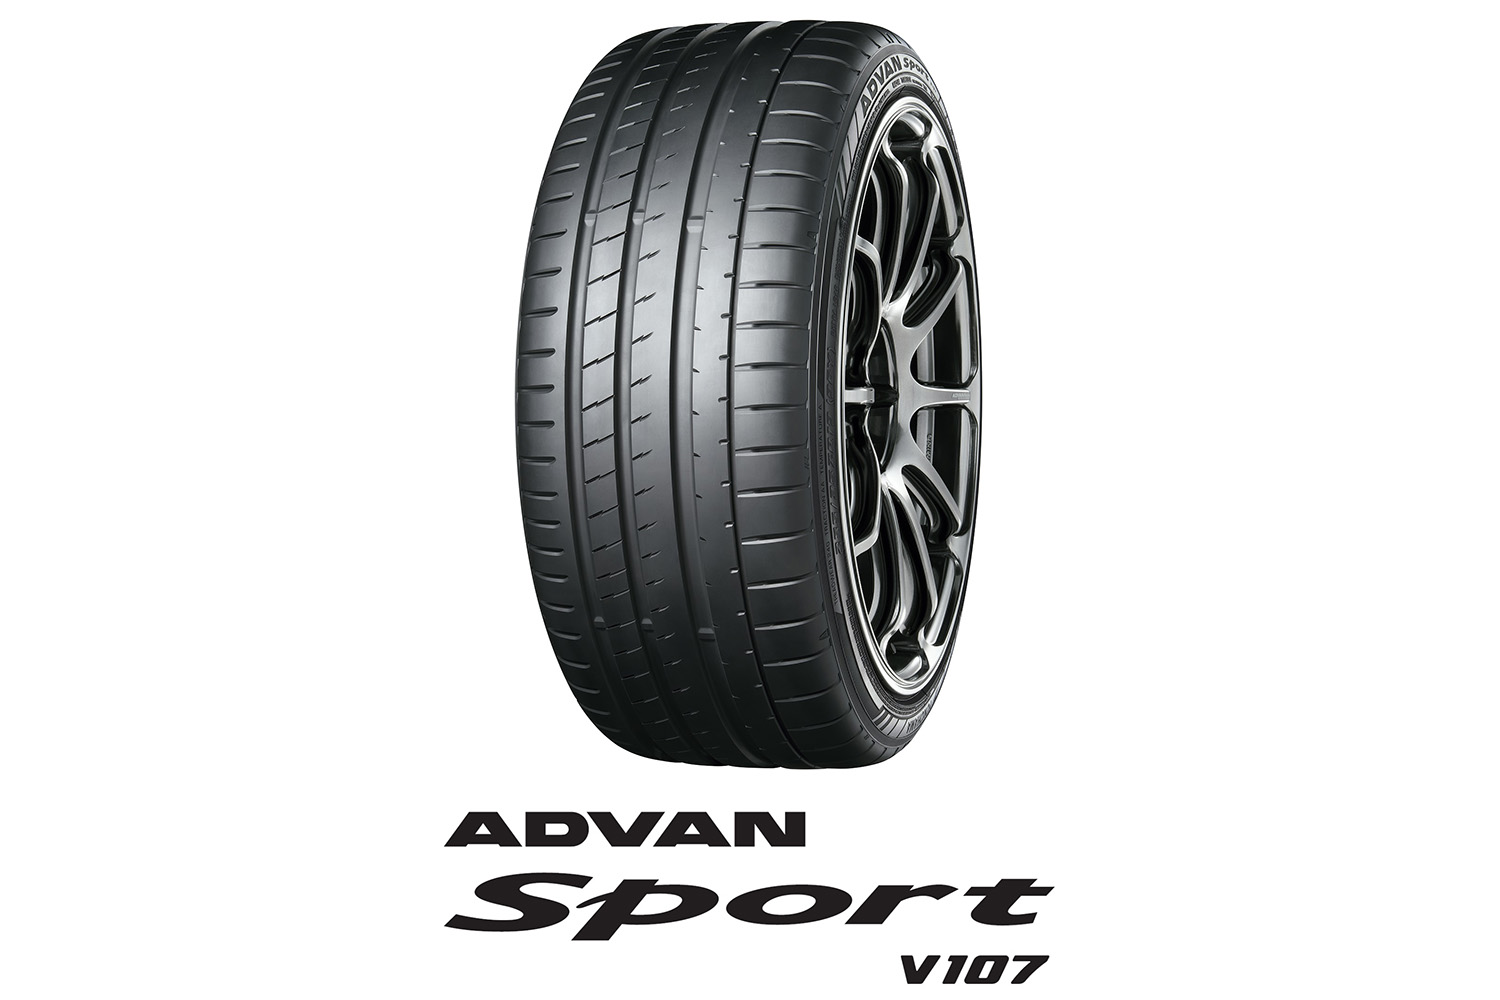 「ADVAN Sport V107」の全体画像